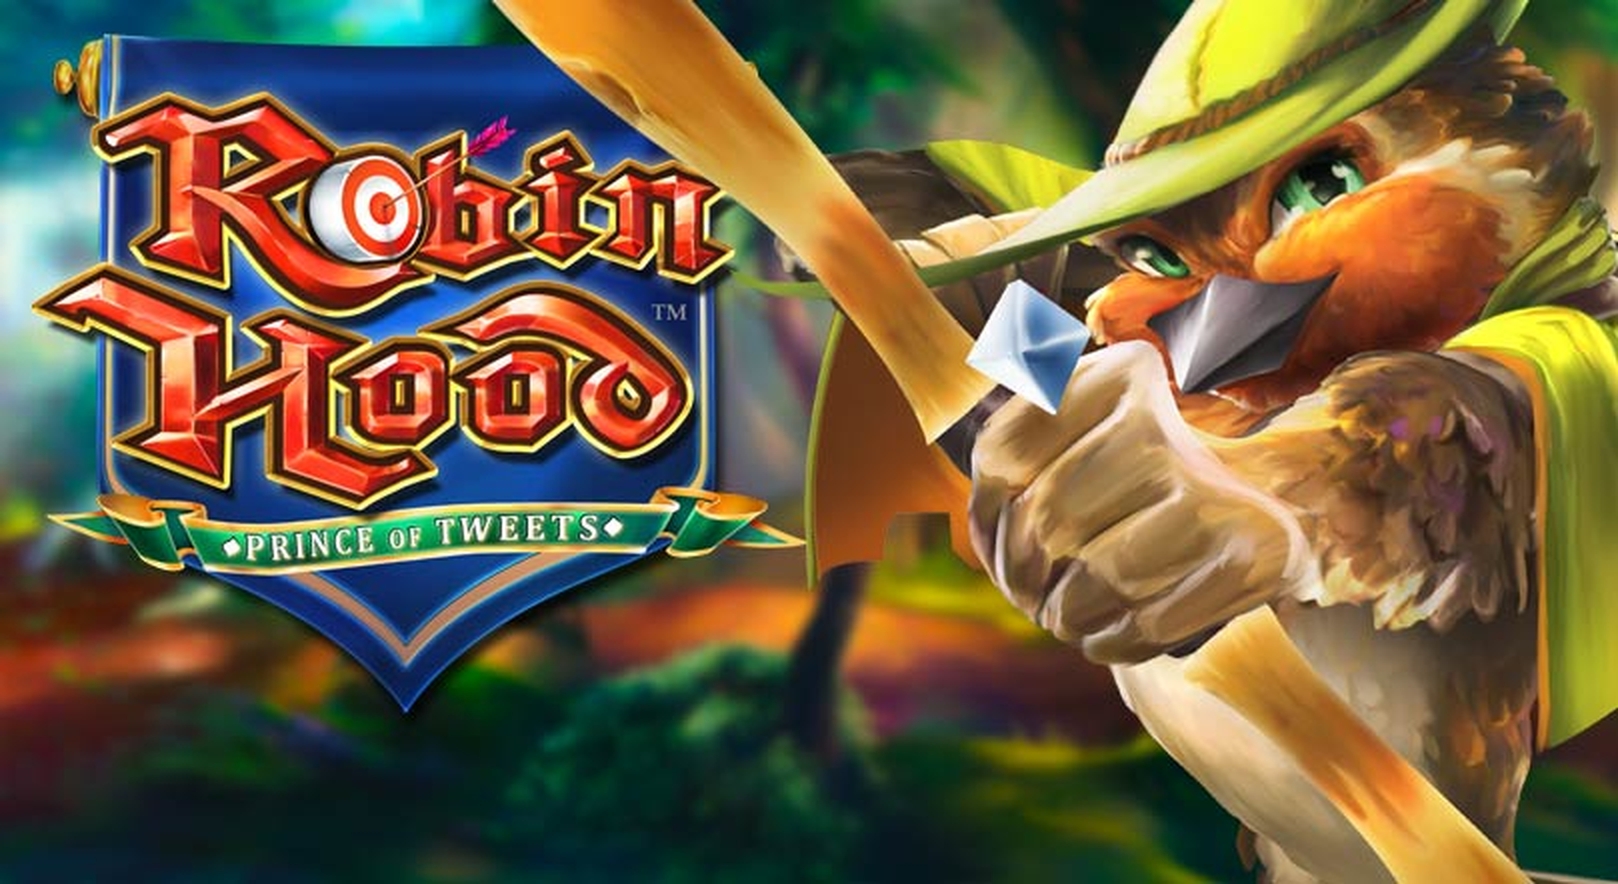 The Robin Hood Prince of Tweets Dice Online Slot Demo Game by NextGen Gaming